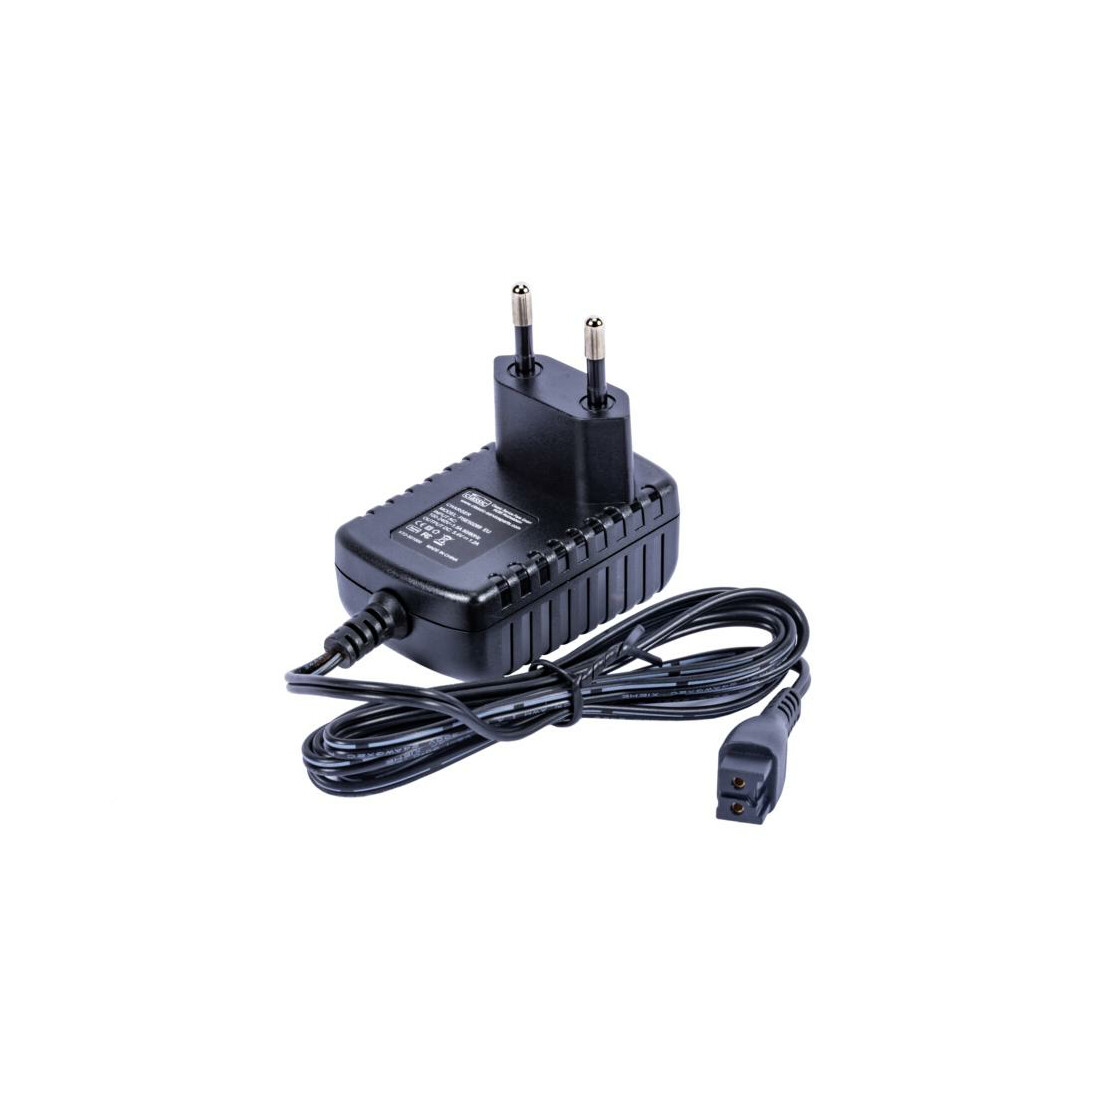 Ladegerät Ladekabel Netzteil Adapter für Panasonic ES-LV65-S Arc5 Rasierer 